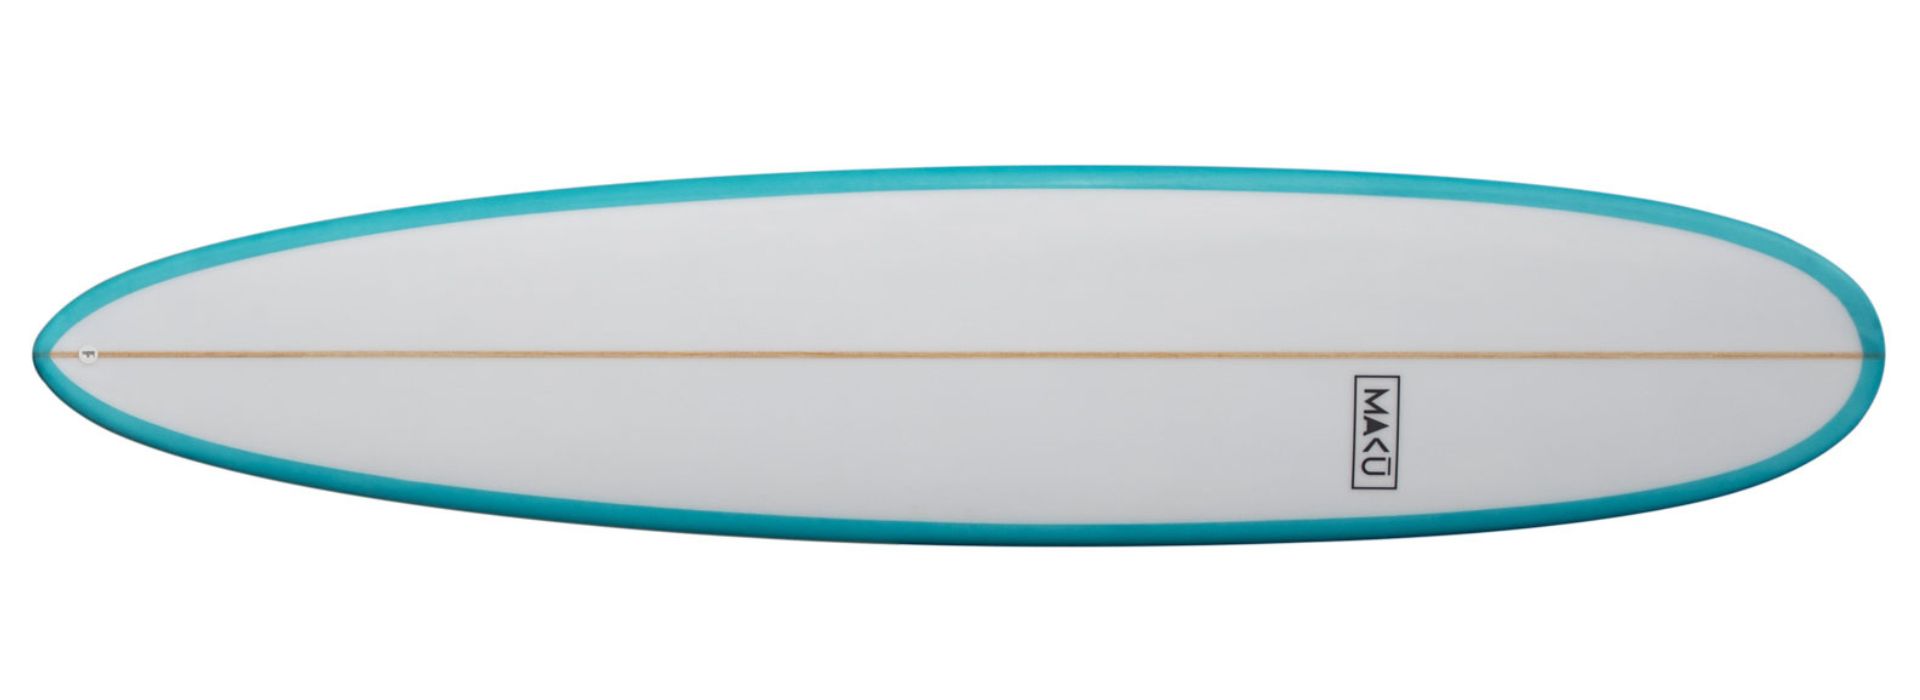 planche de surf de type longboard